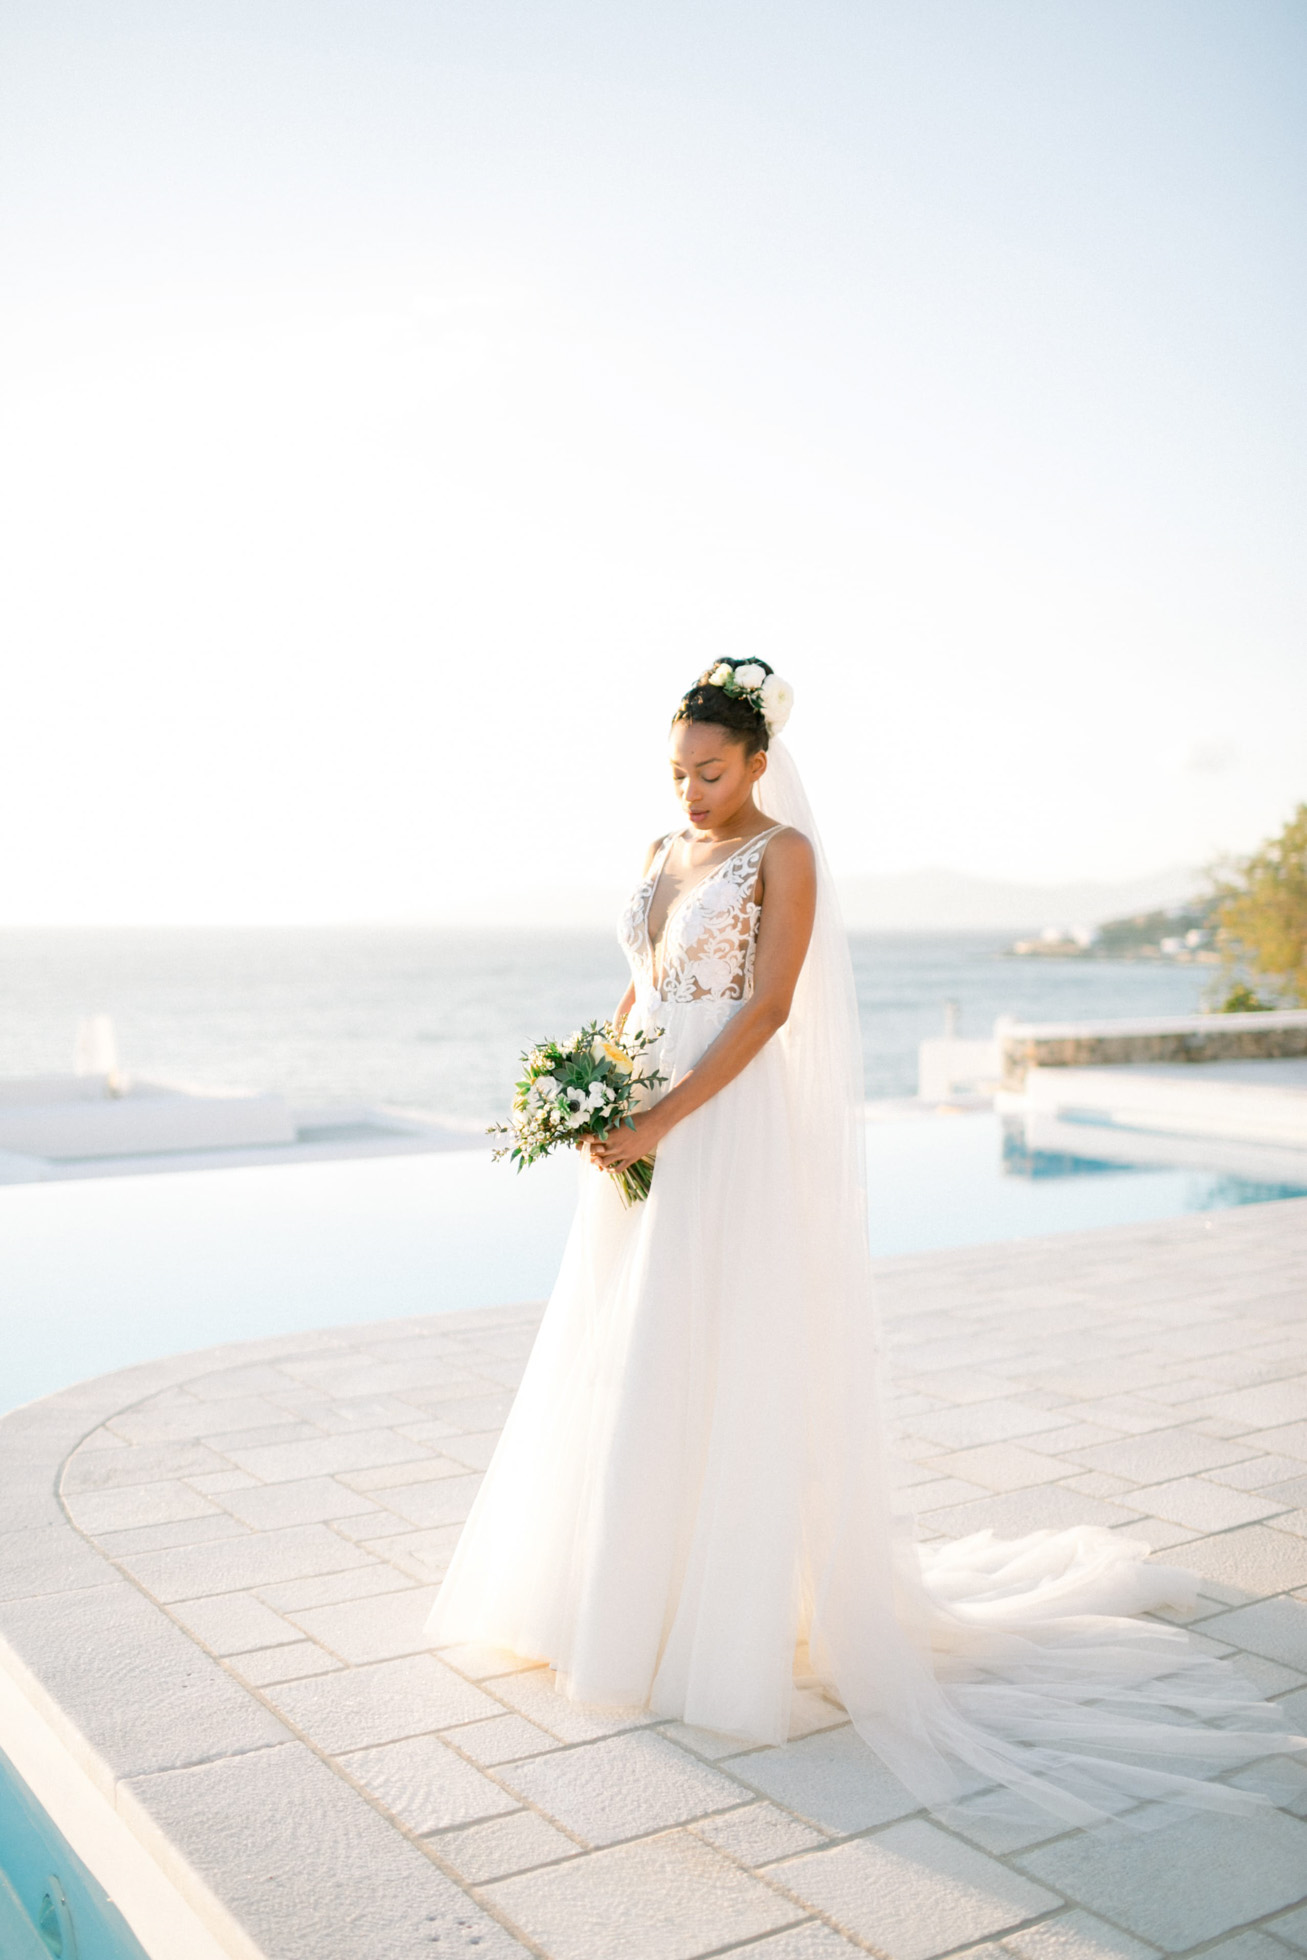 Stunning black bride at a villa wedding inspiration session by DeplanV in Loyal Villas Luxury, Mykonos, Greece.